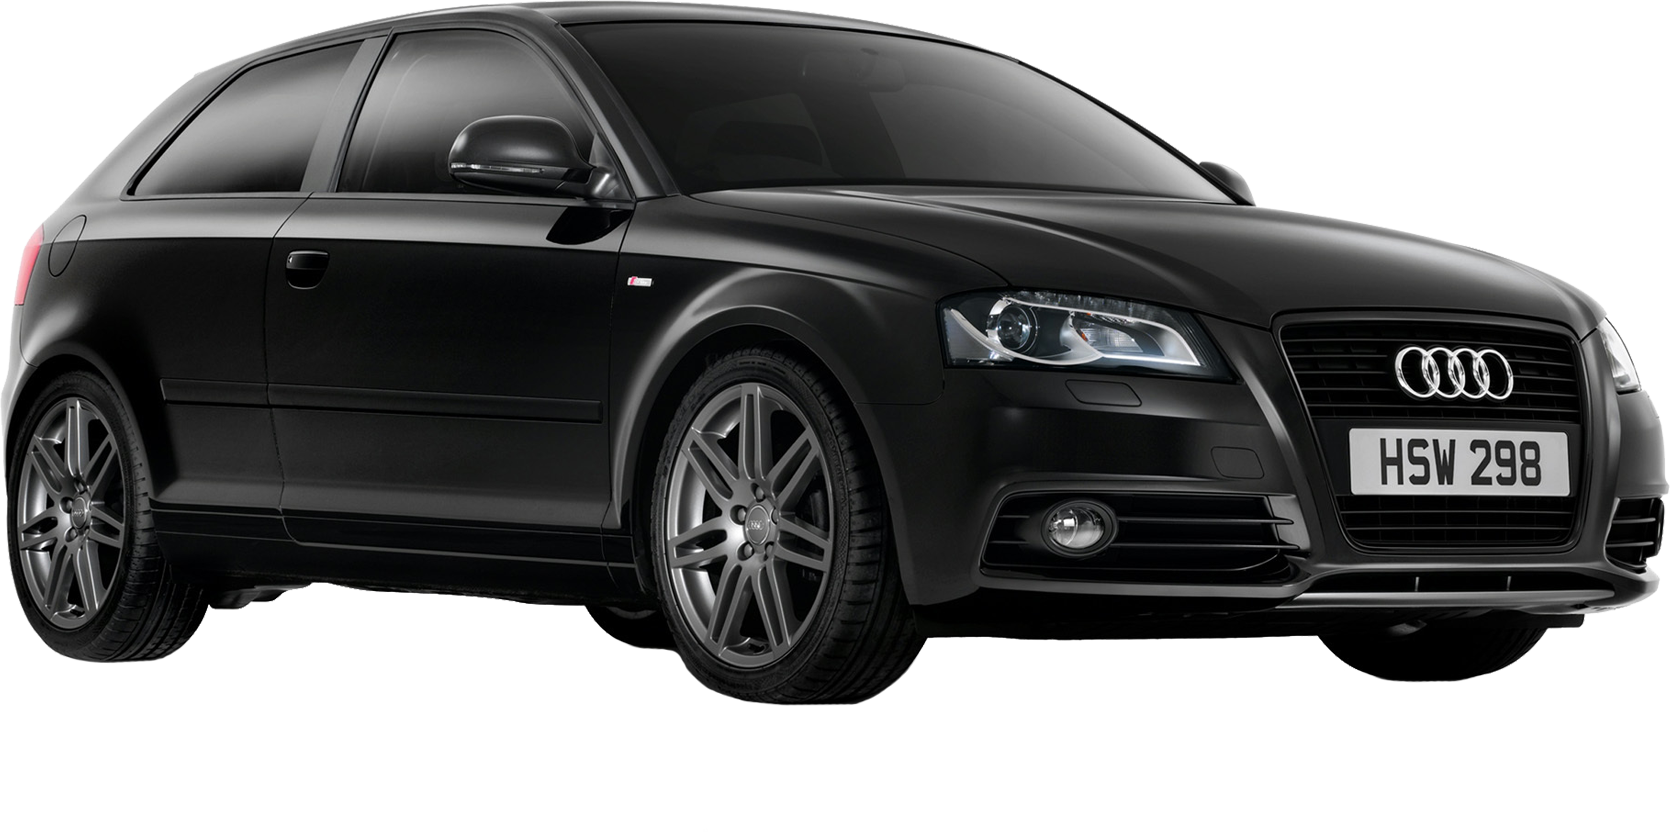 Black AUDI PNG car image transparent image download, size: 1670x832px